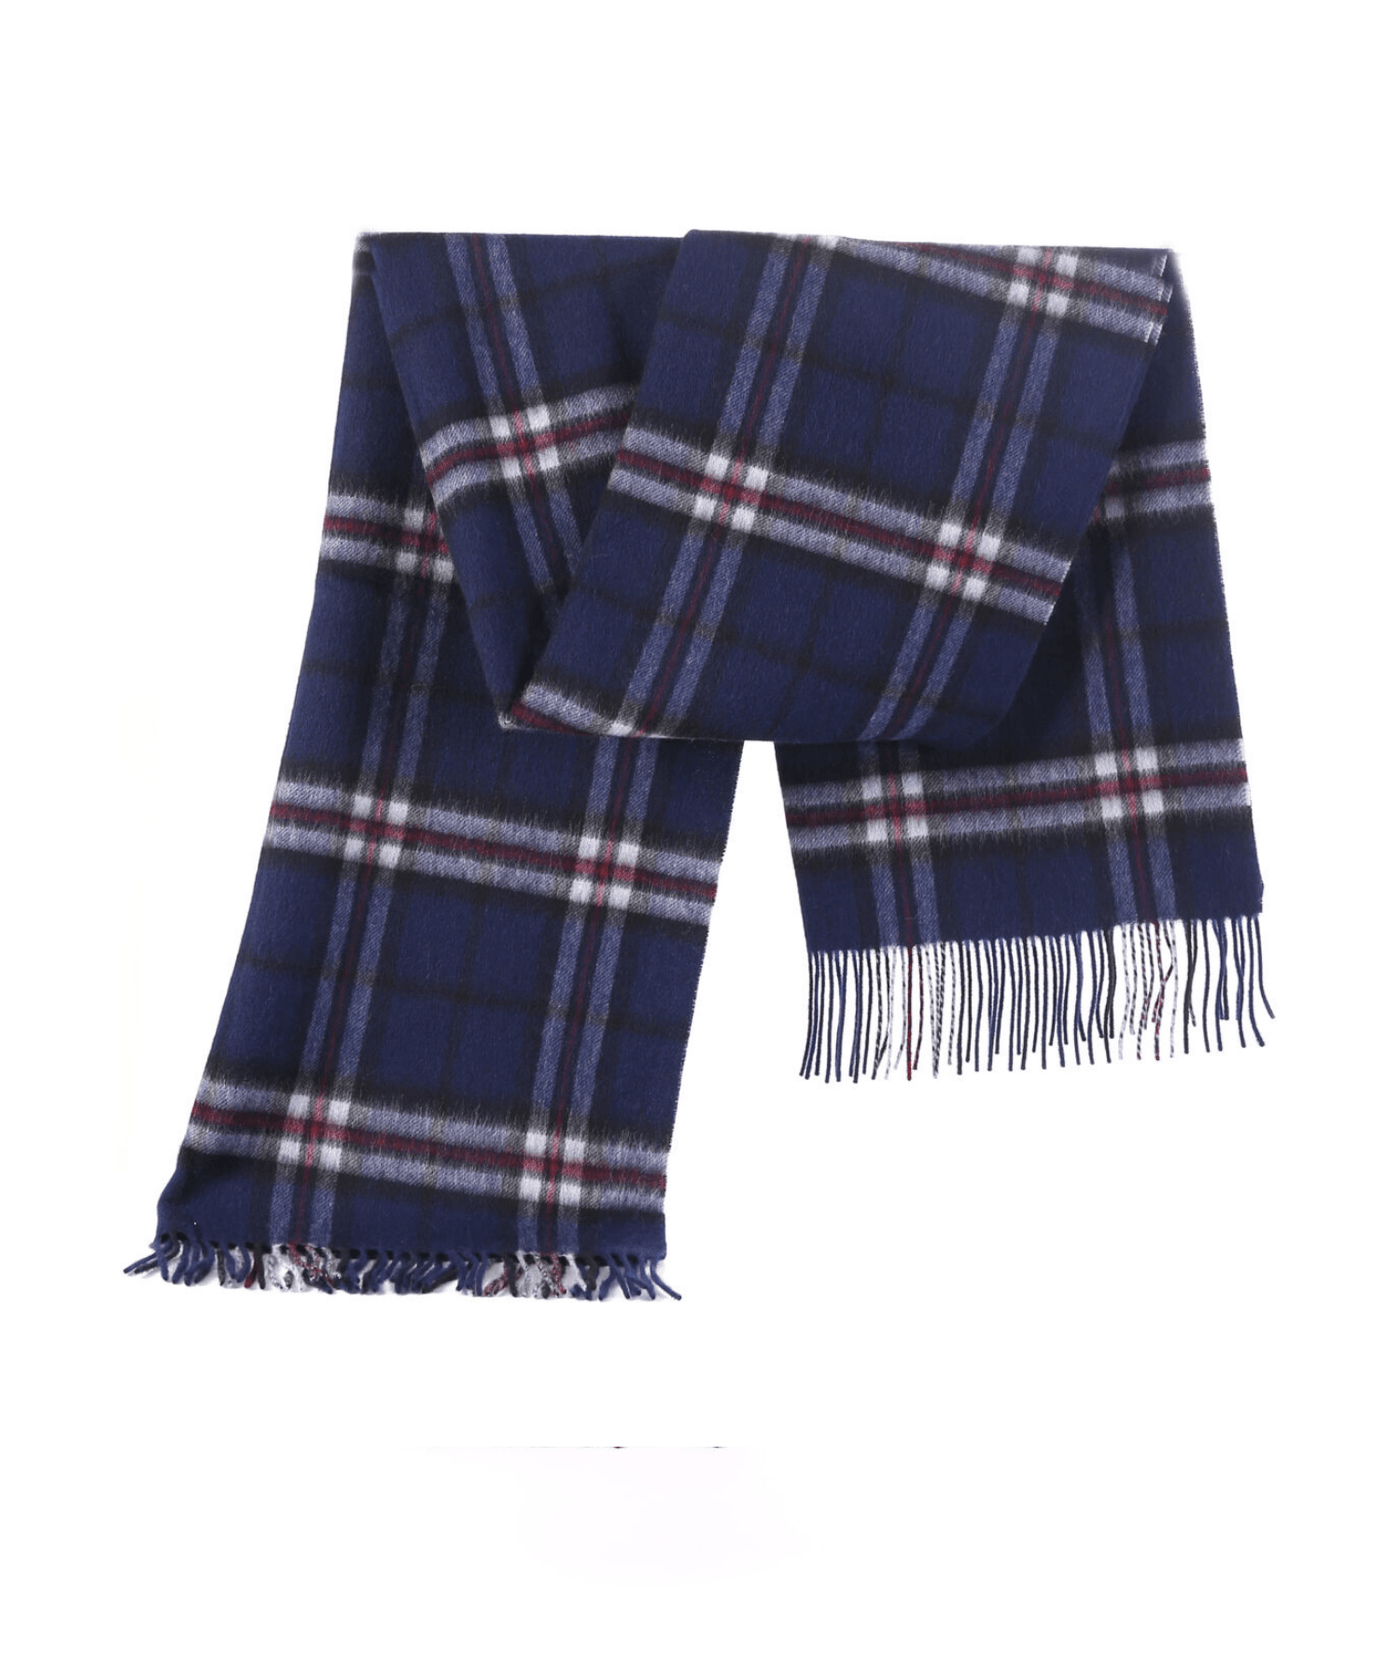 Blanket 100% Pure Throw wool Scottish Design